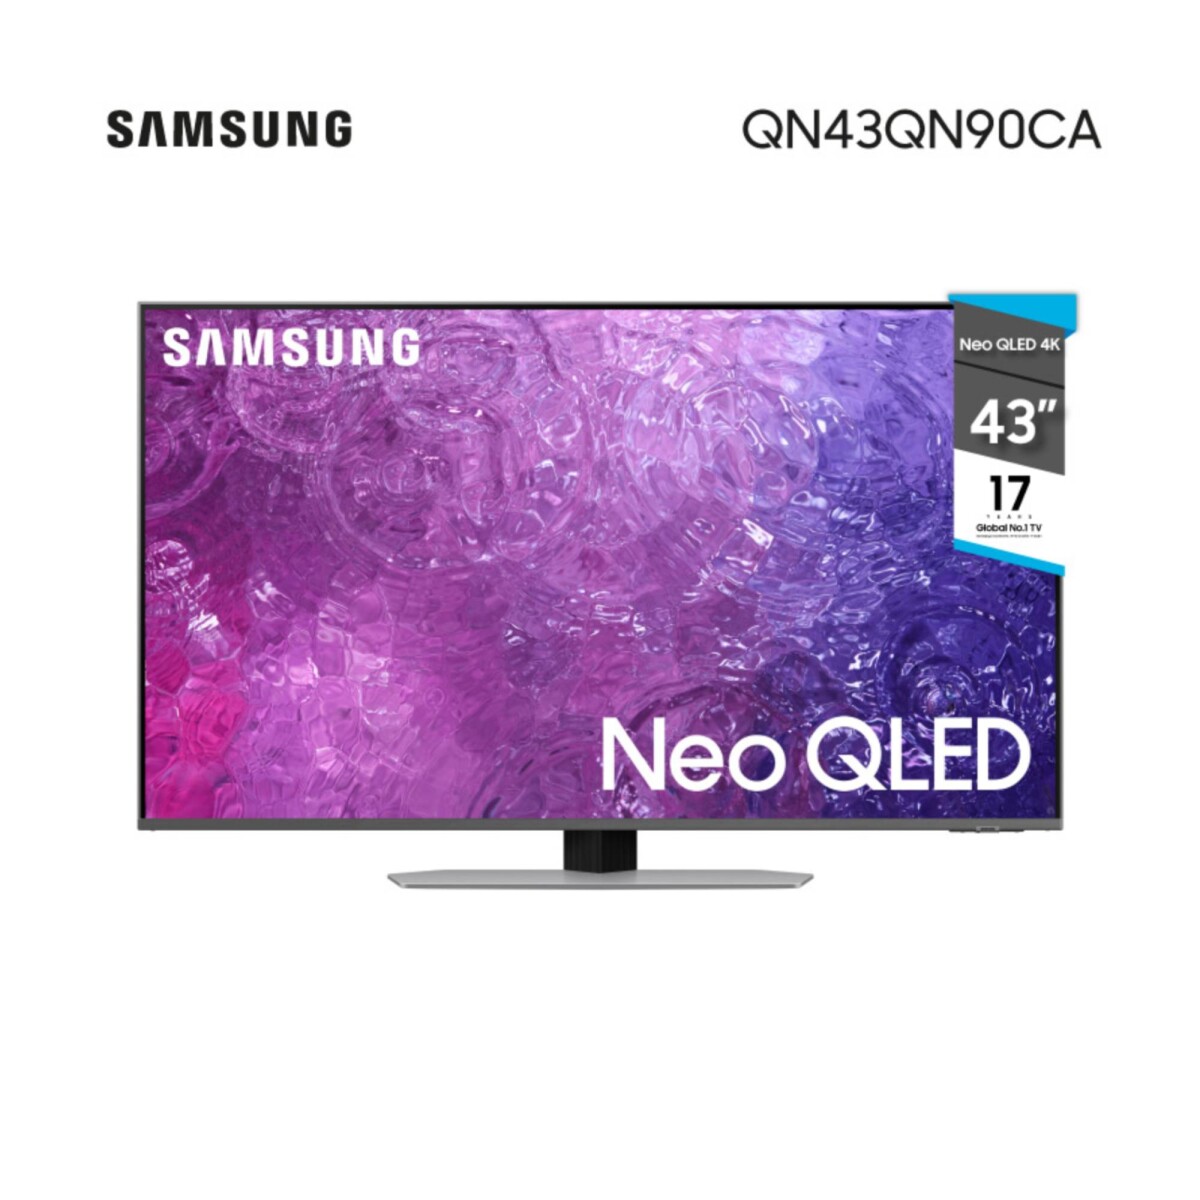 Smart TV Samsung Neo QLED 43" UHD 4K - SAQN43QN90CA 